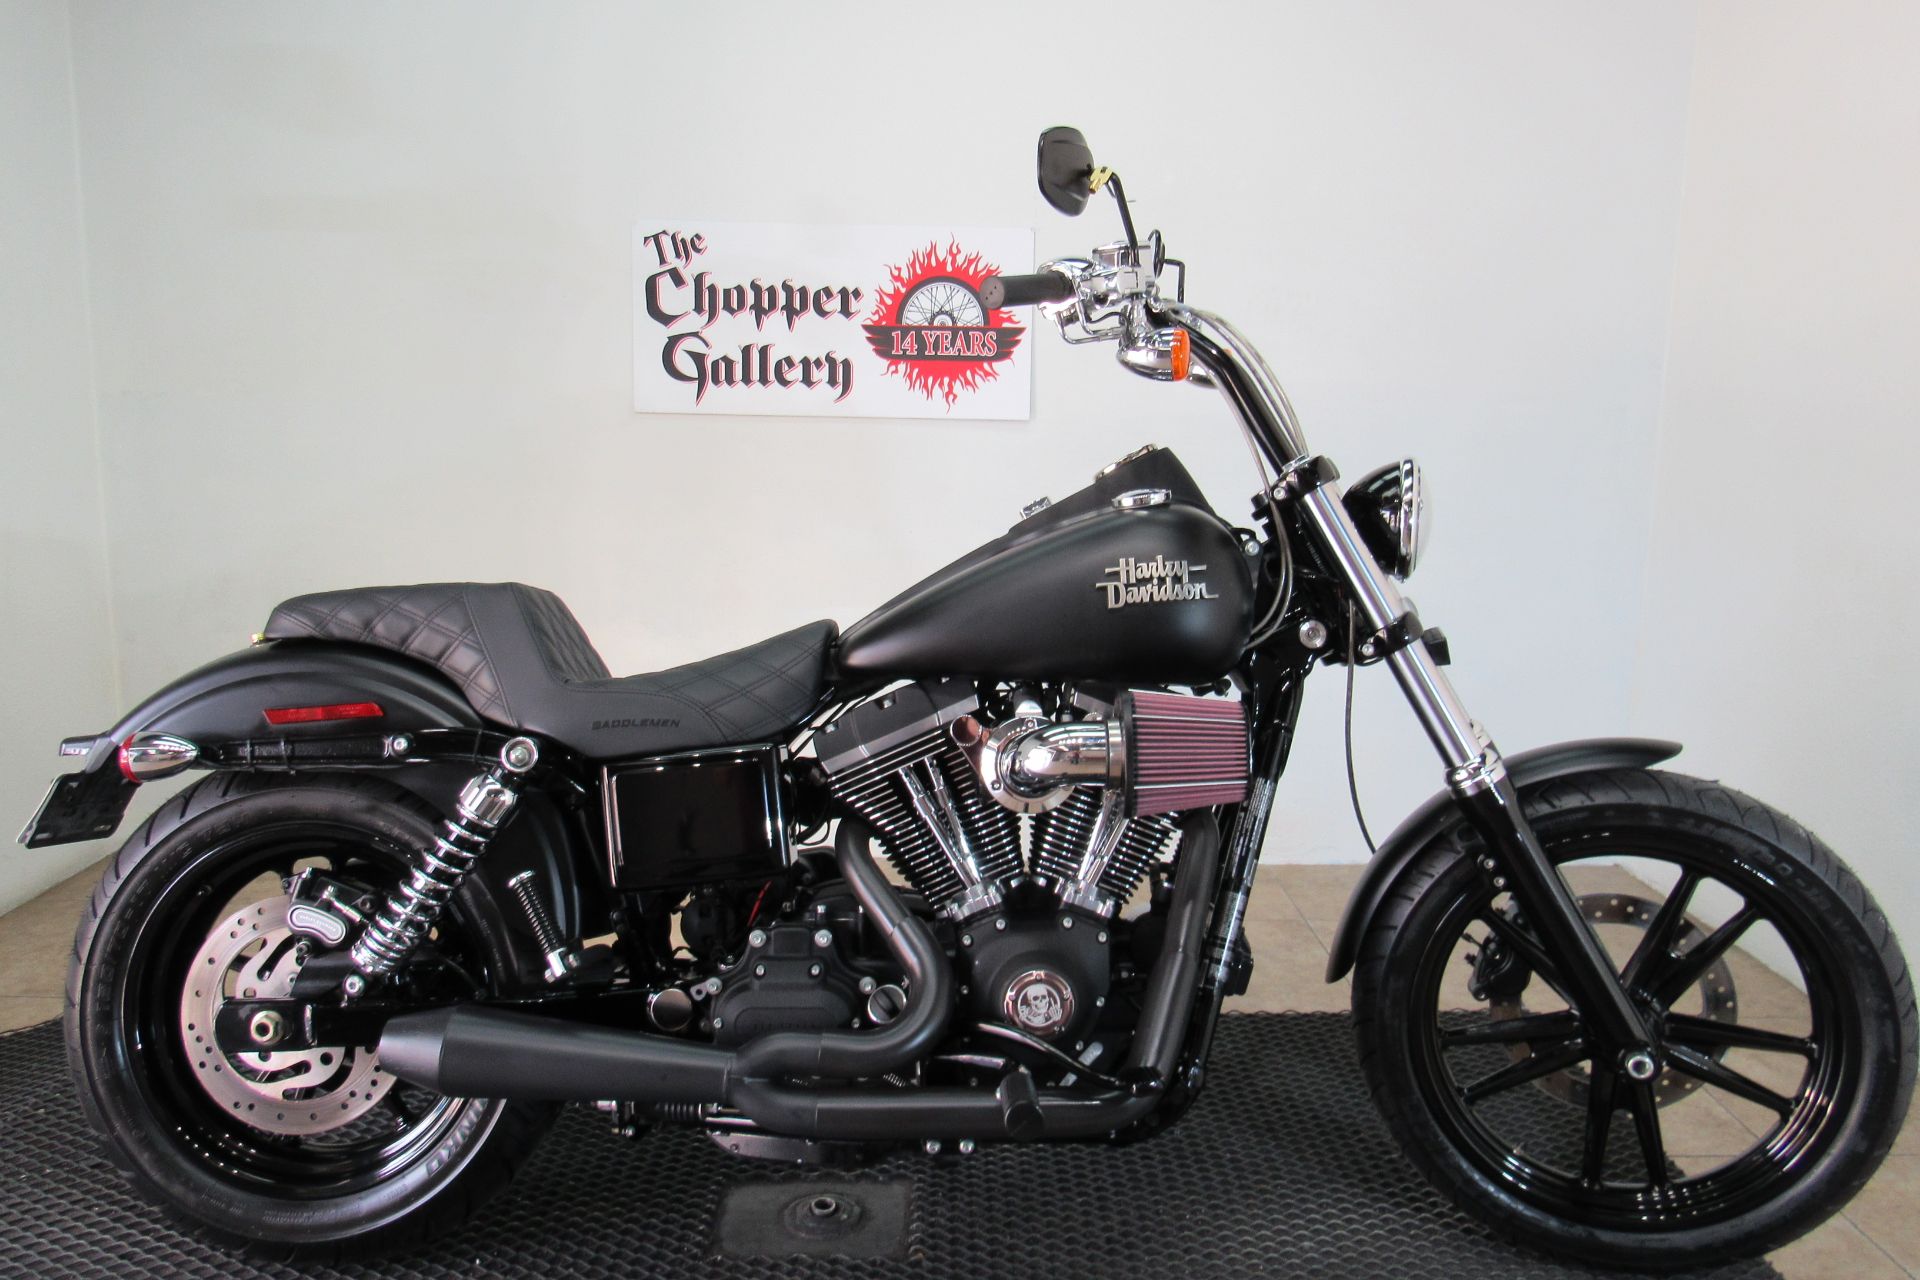 2016 Harley-Davidson Street Bob® in Temecula, California - Photo 1